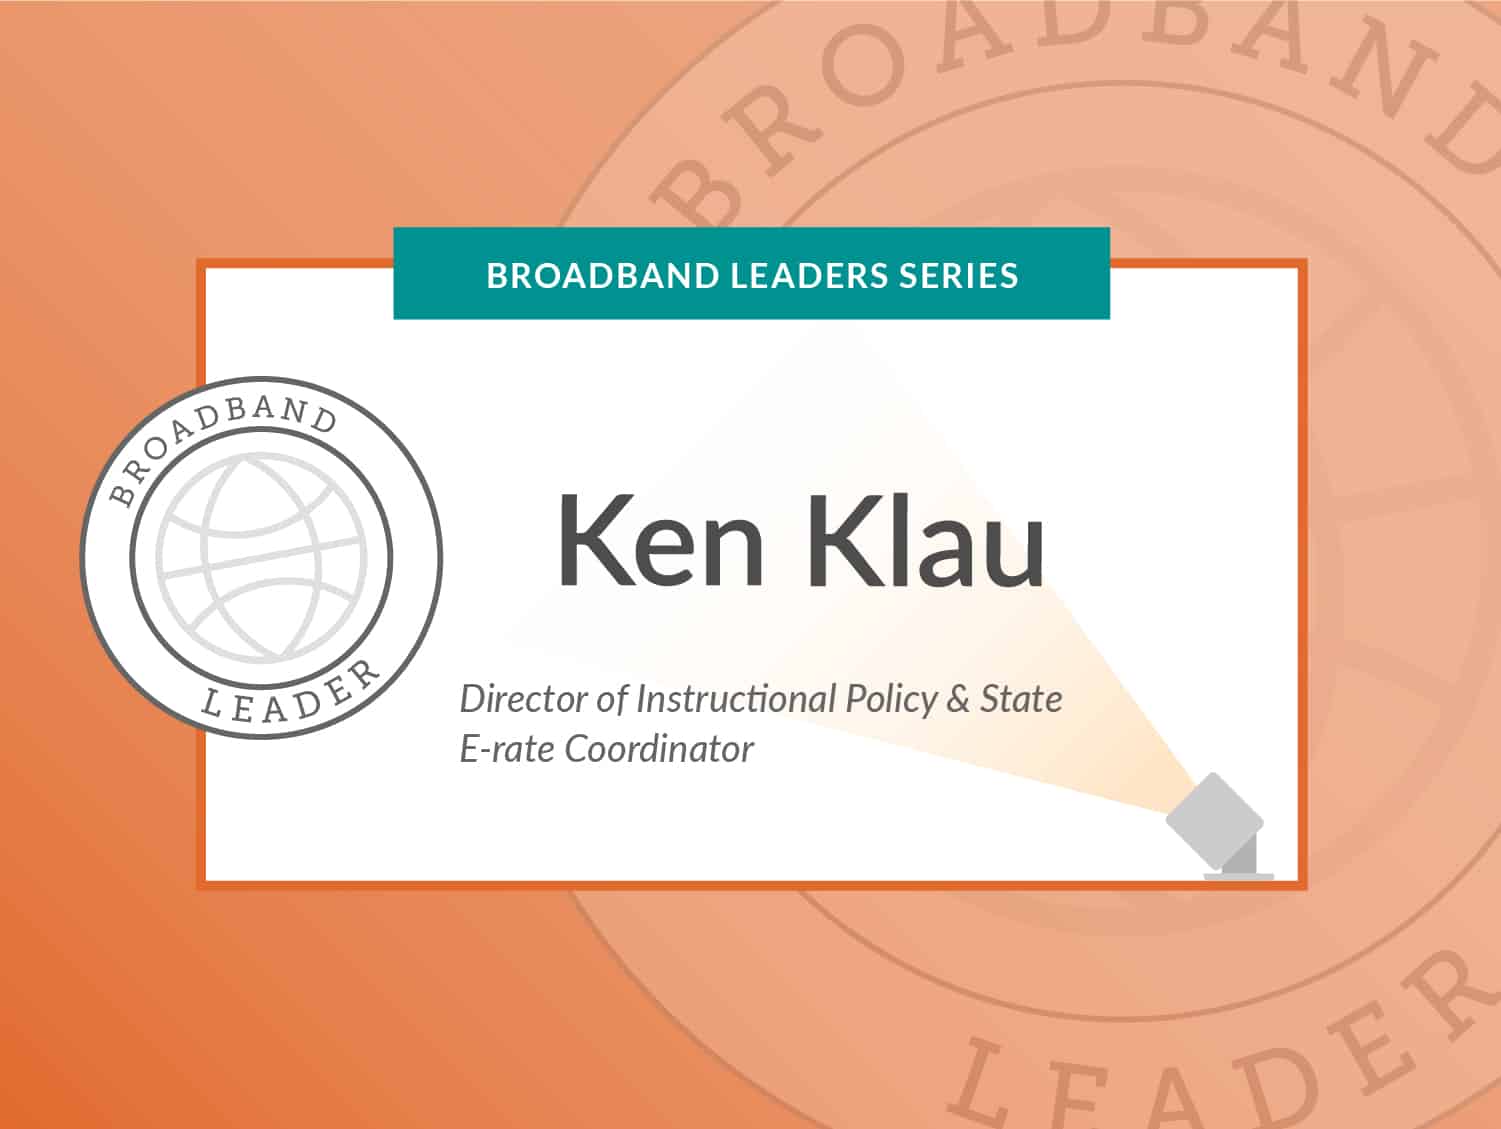 Broadband Leaders Series - Ken Klau, Director of Instructional Policy & State E-rate Coordinator